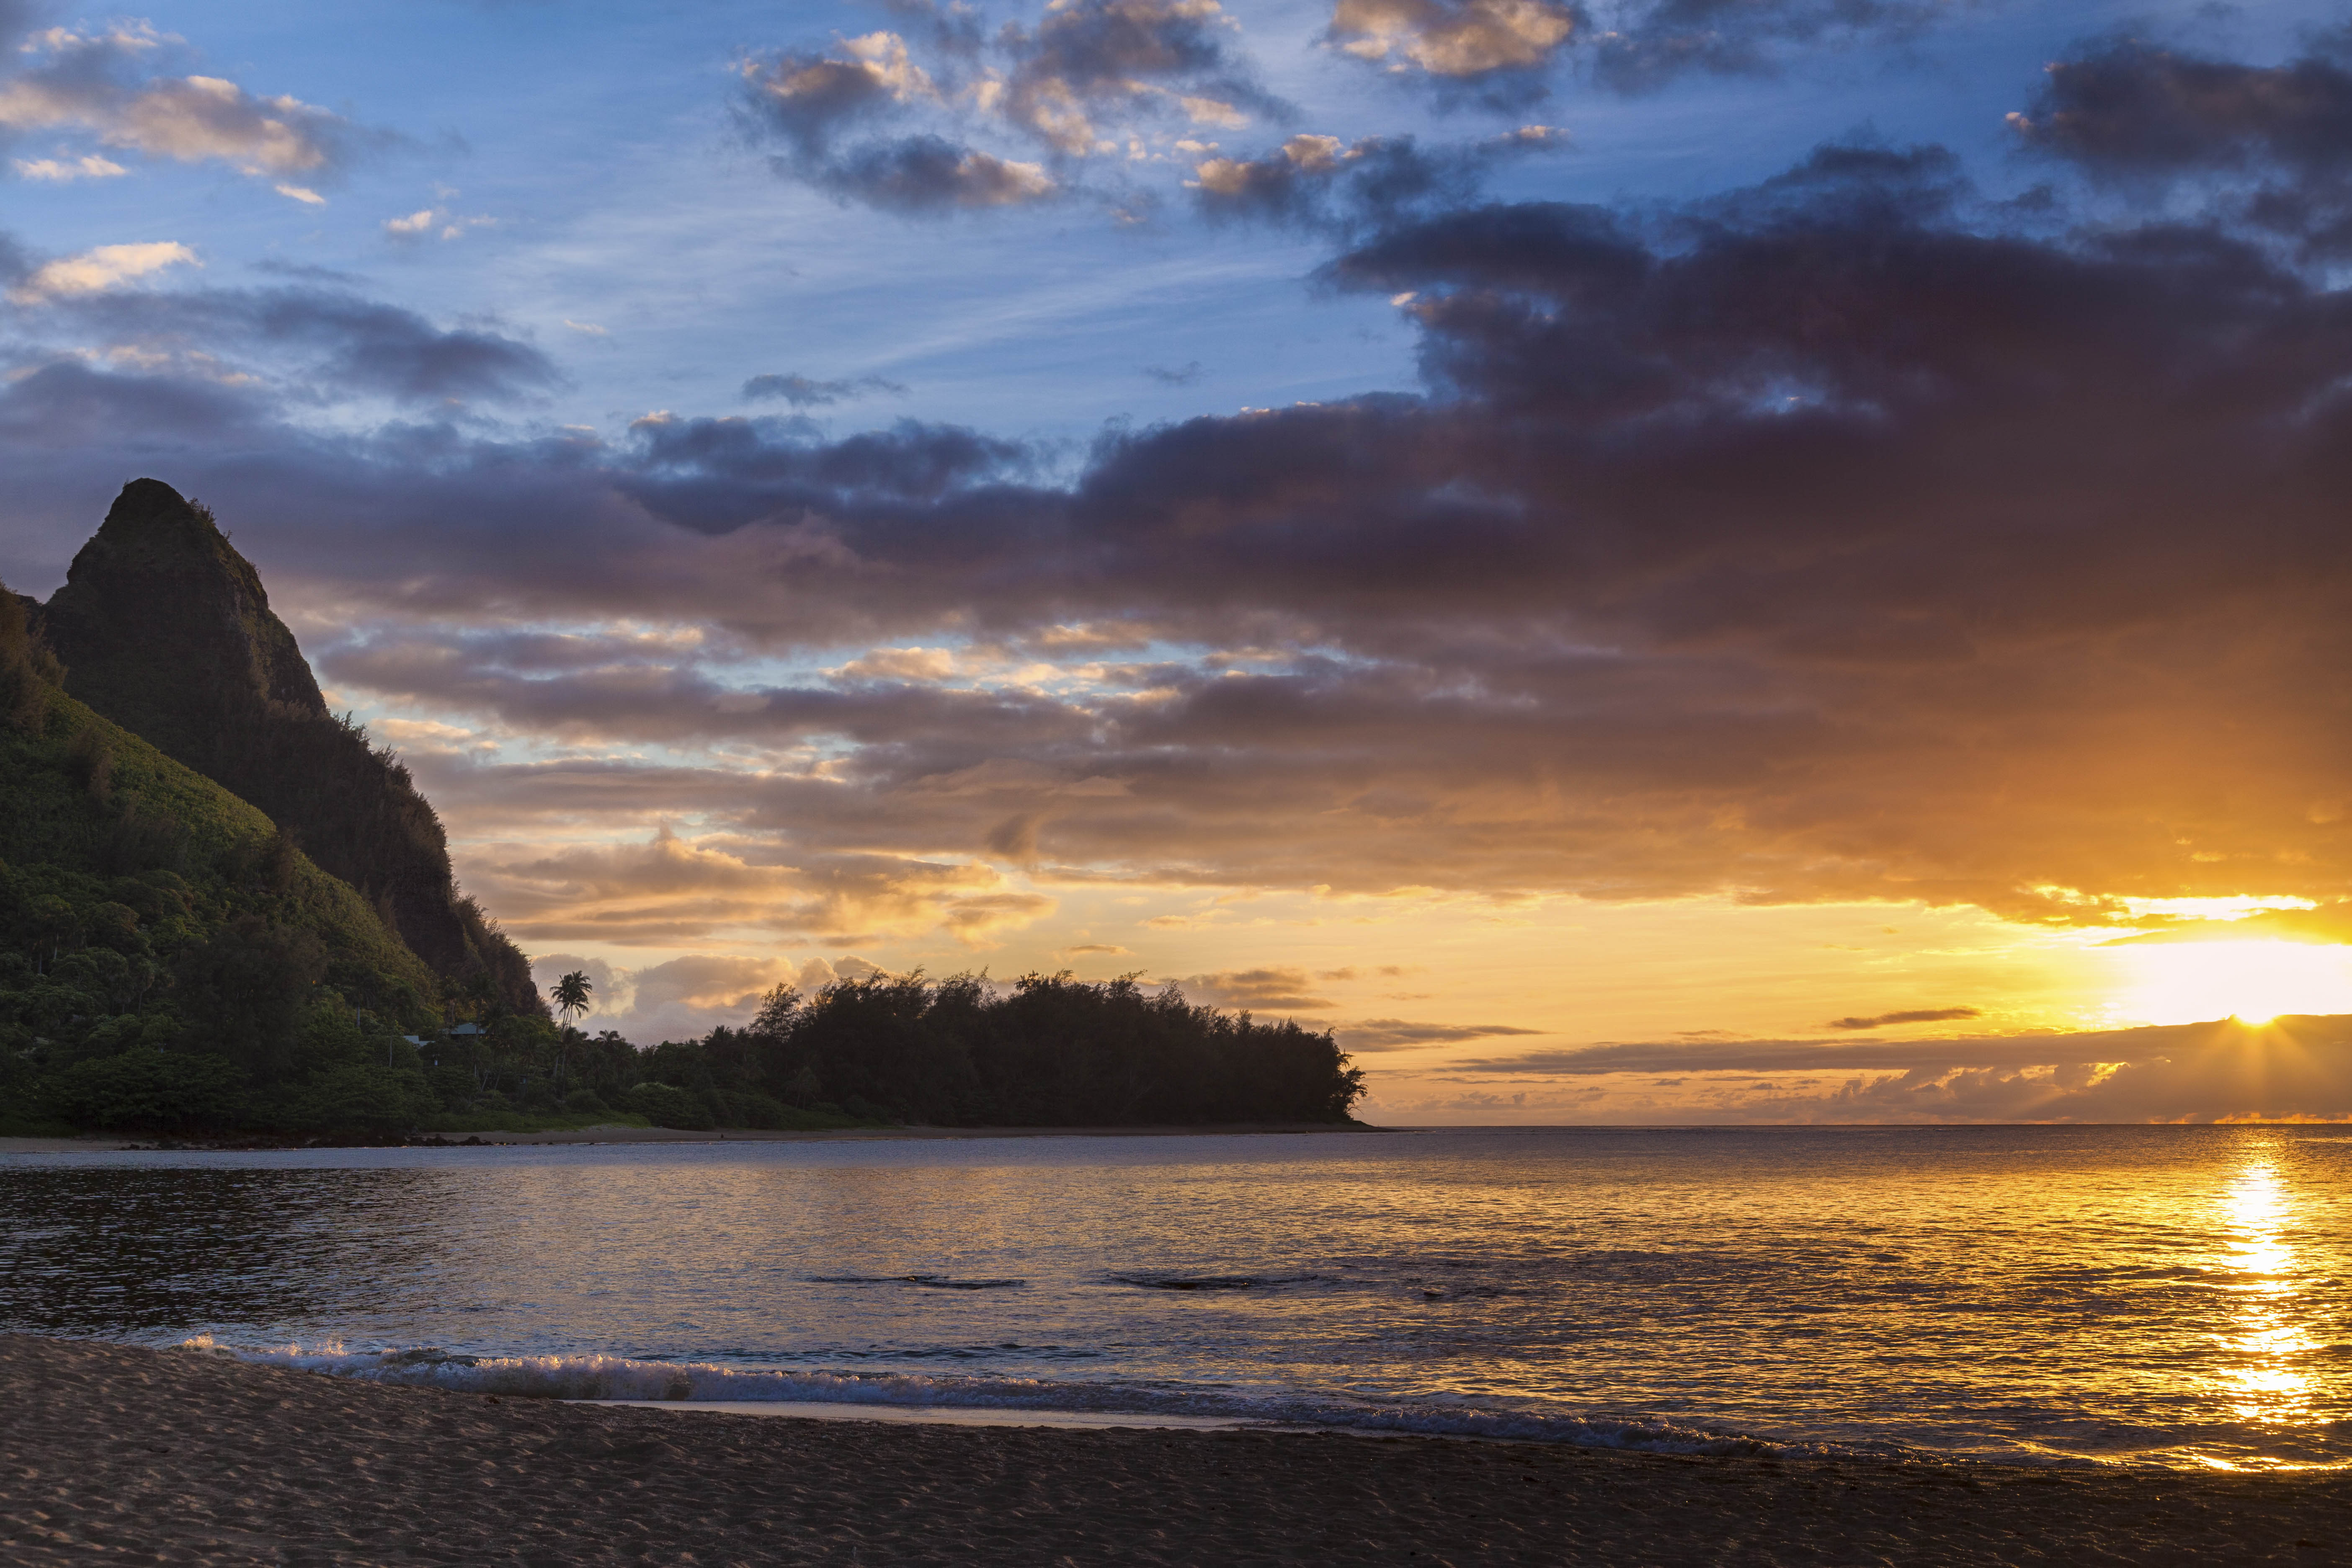 Makana (aka Bali Hai) at sunset. Image by Ken Brown / Getty